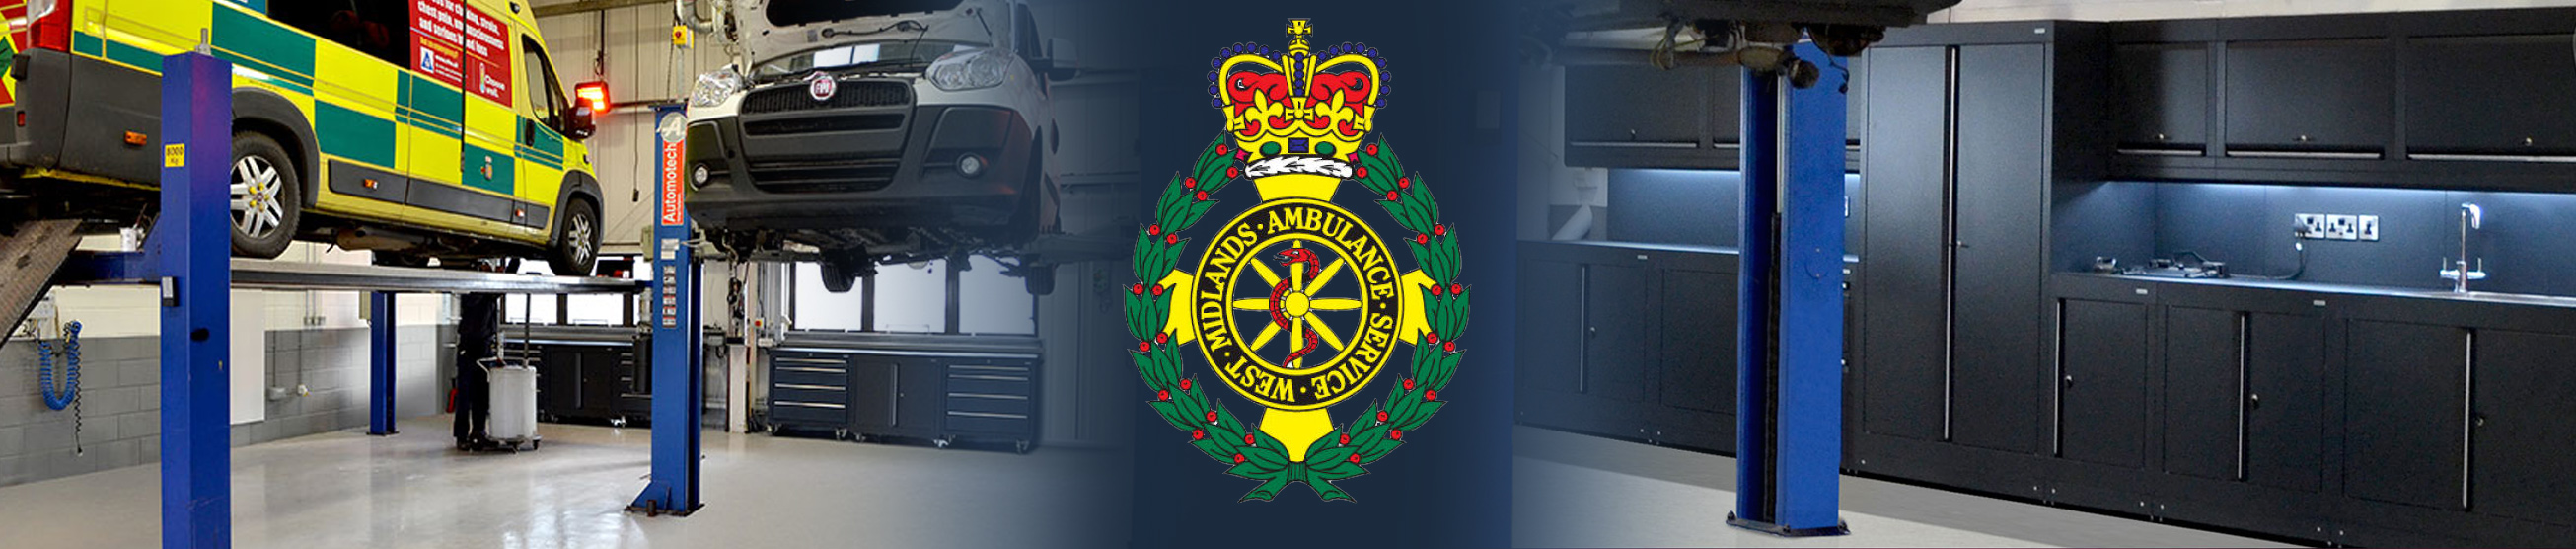 West Midlands Ambulance Service responding to national health emergency with Fleet Hub Workshop